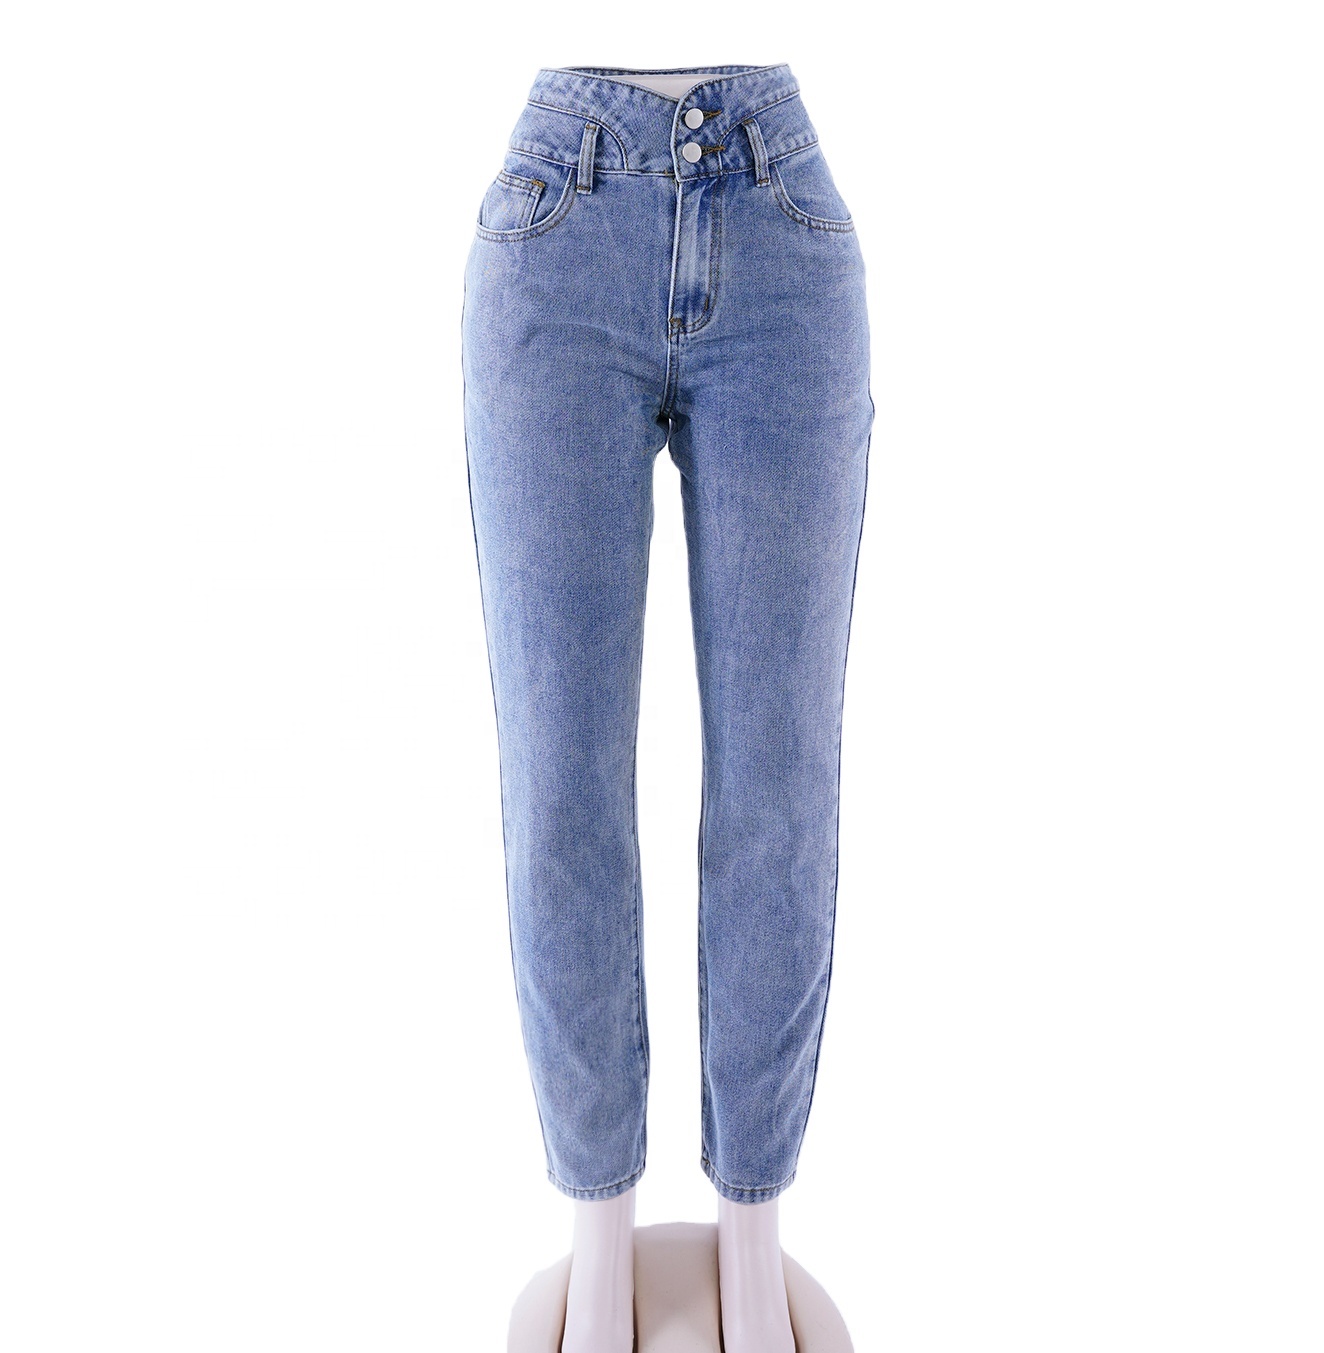 SKYKINGDOM brand design denim jeans light blue straight tube stretch jeans for woman